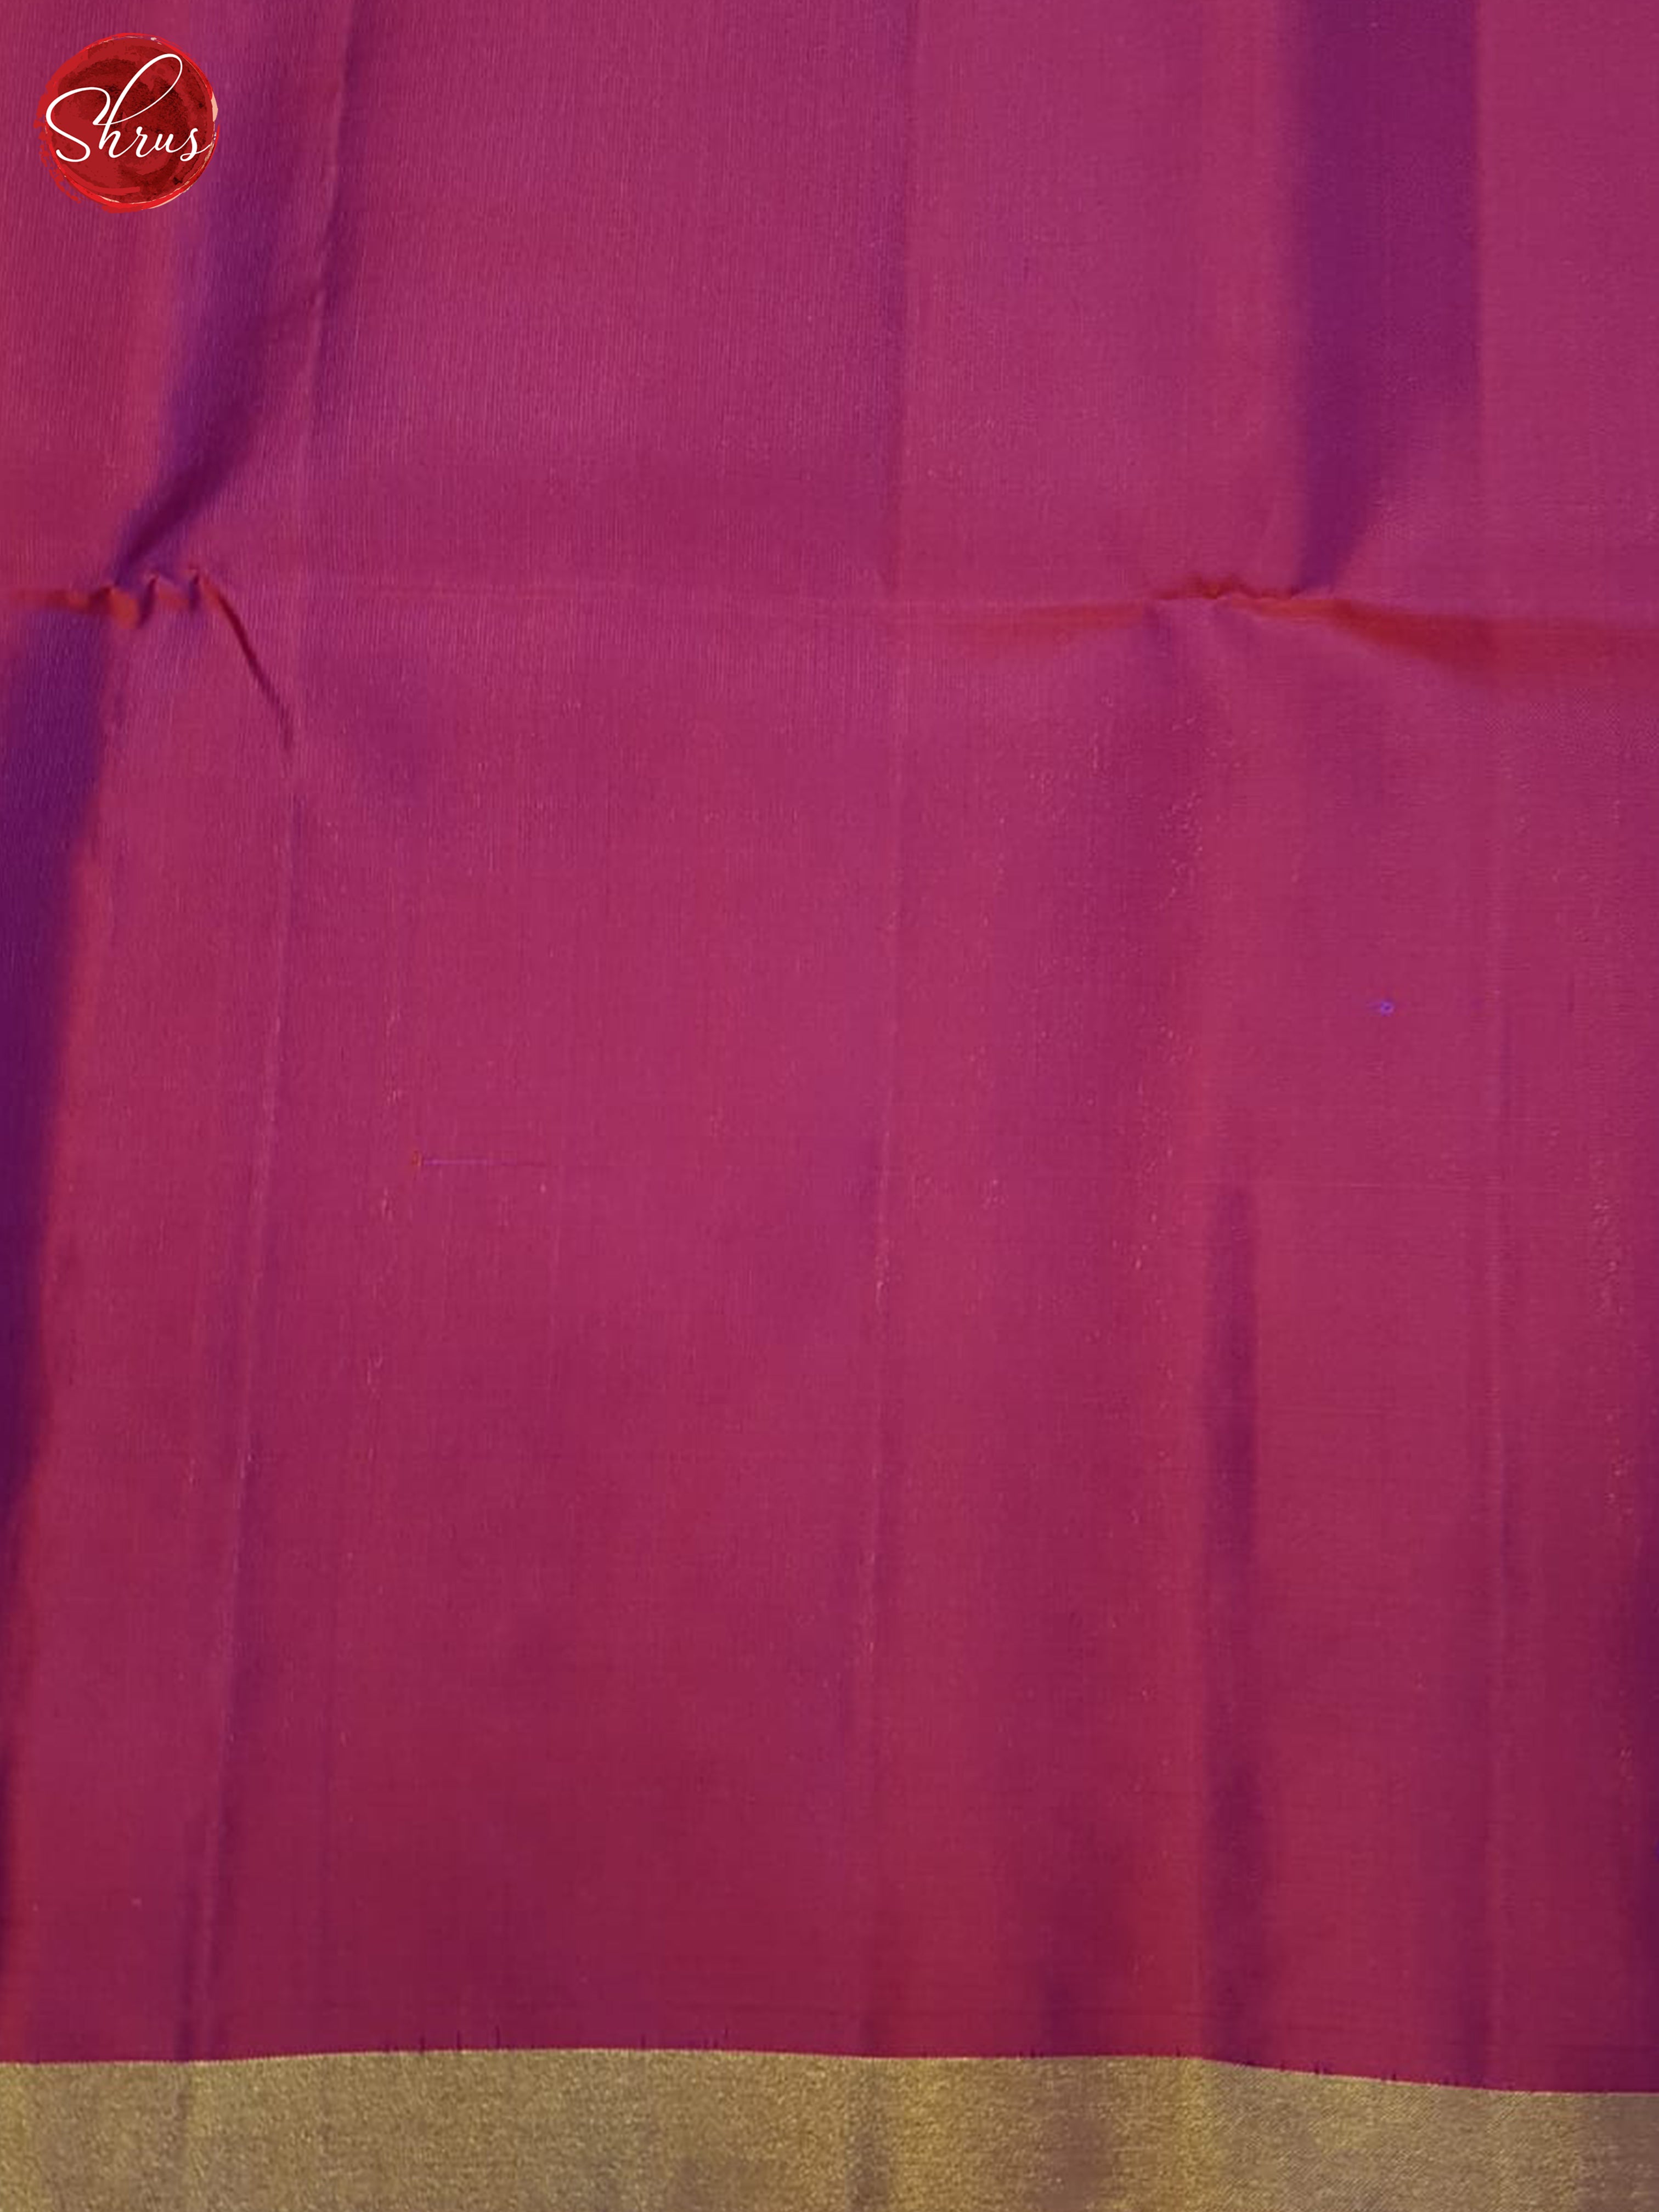 Dual Toned Purple (Single Tone) - Soft SIlk Saree - Shop on ShrusEternity.com